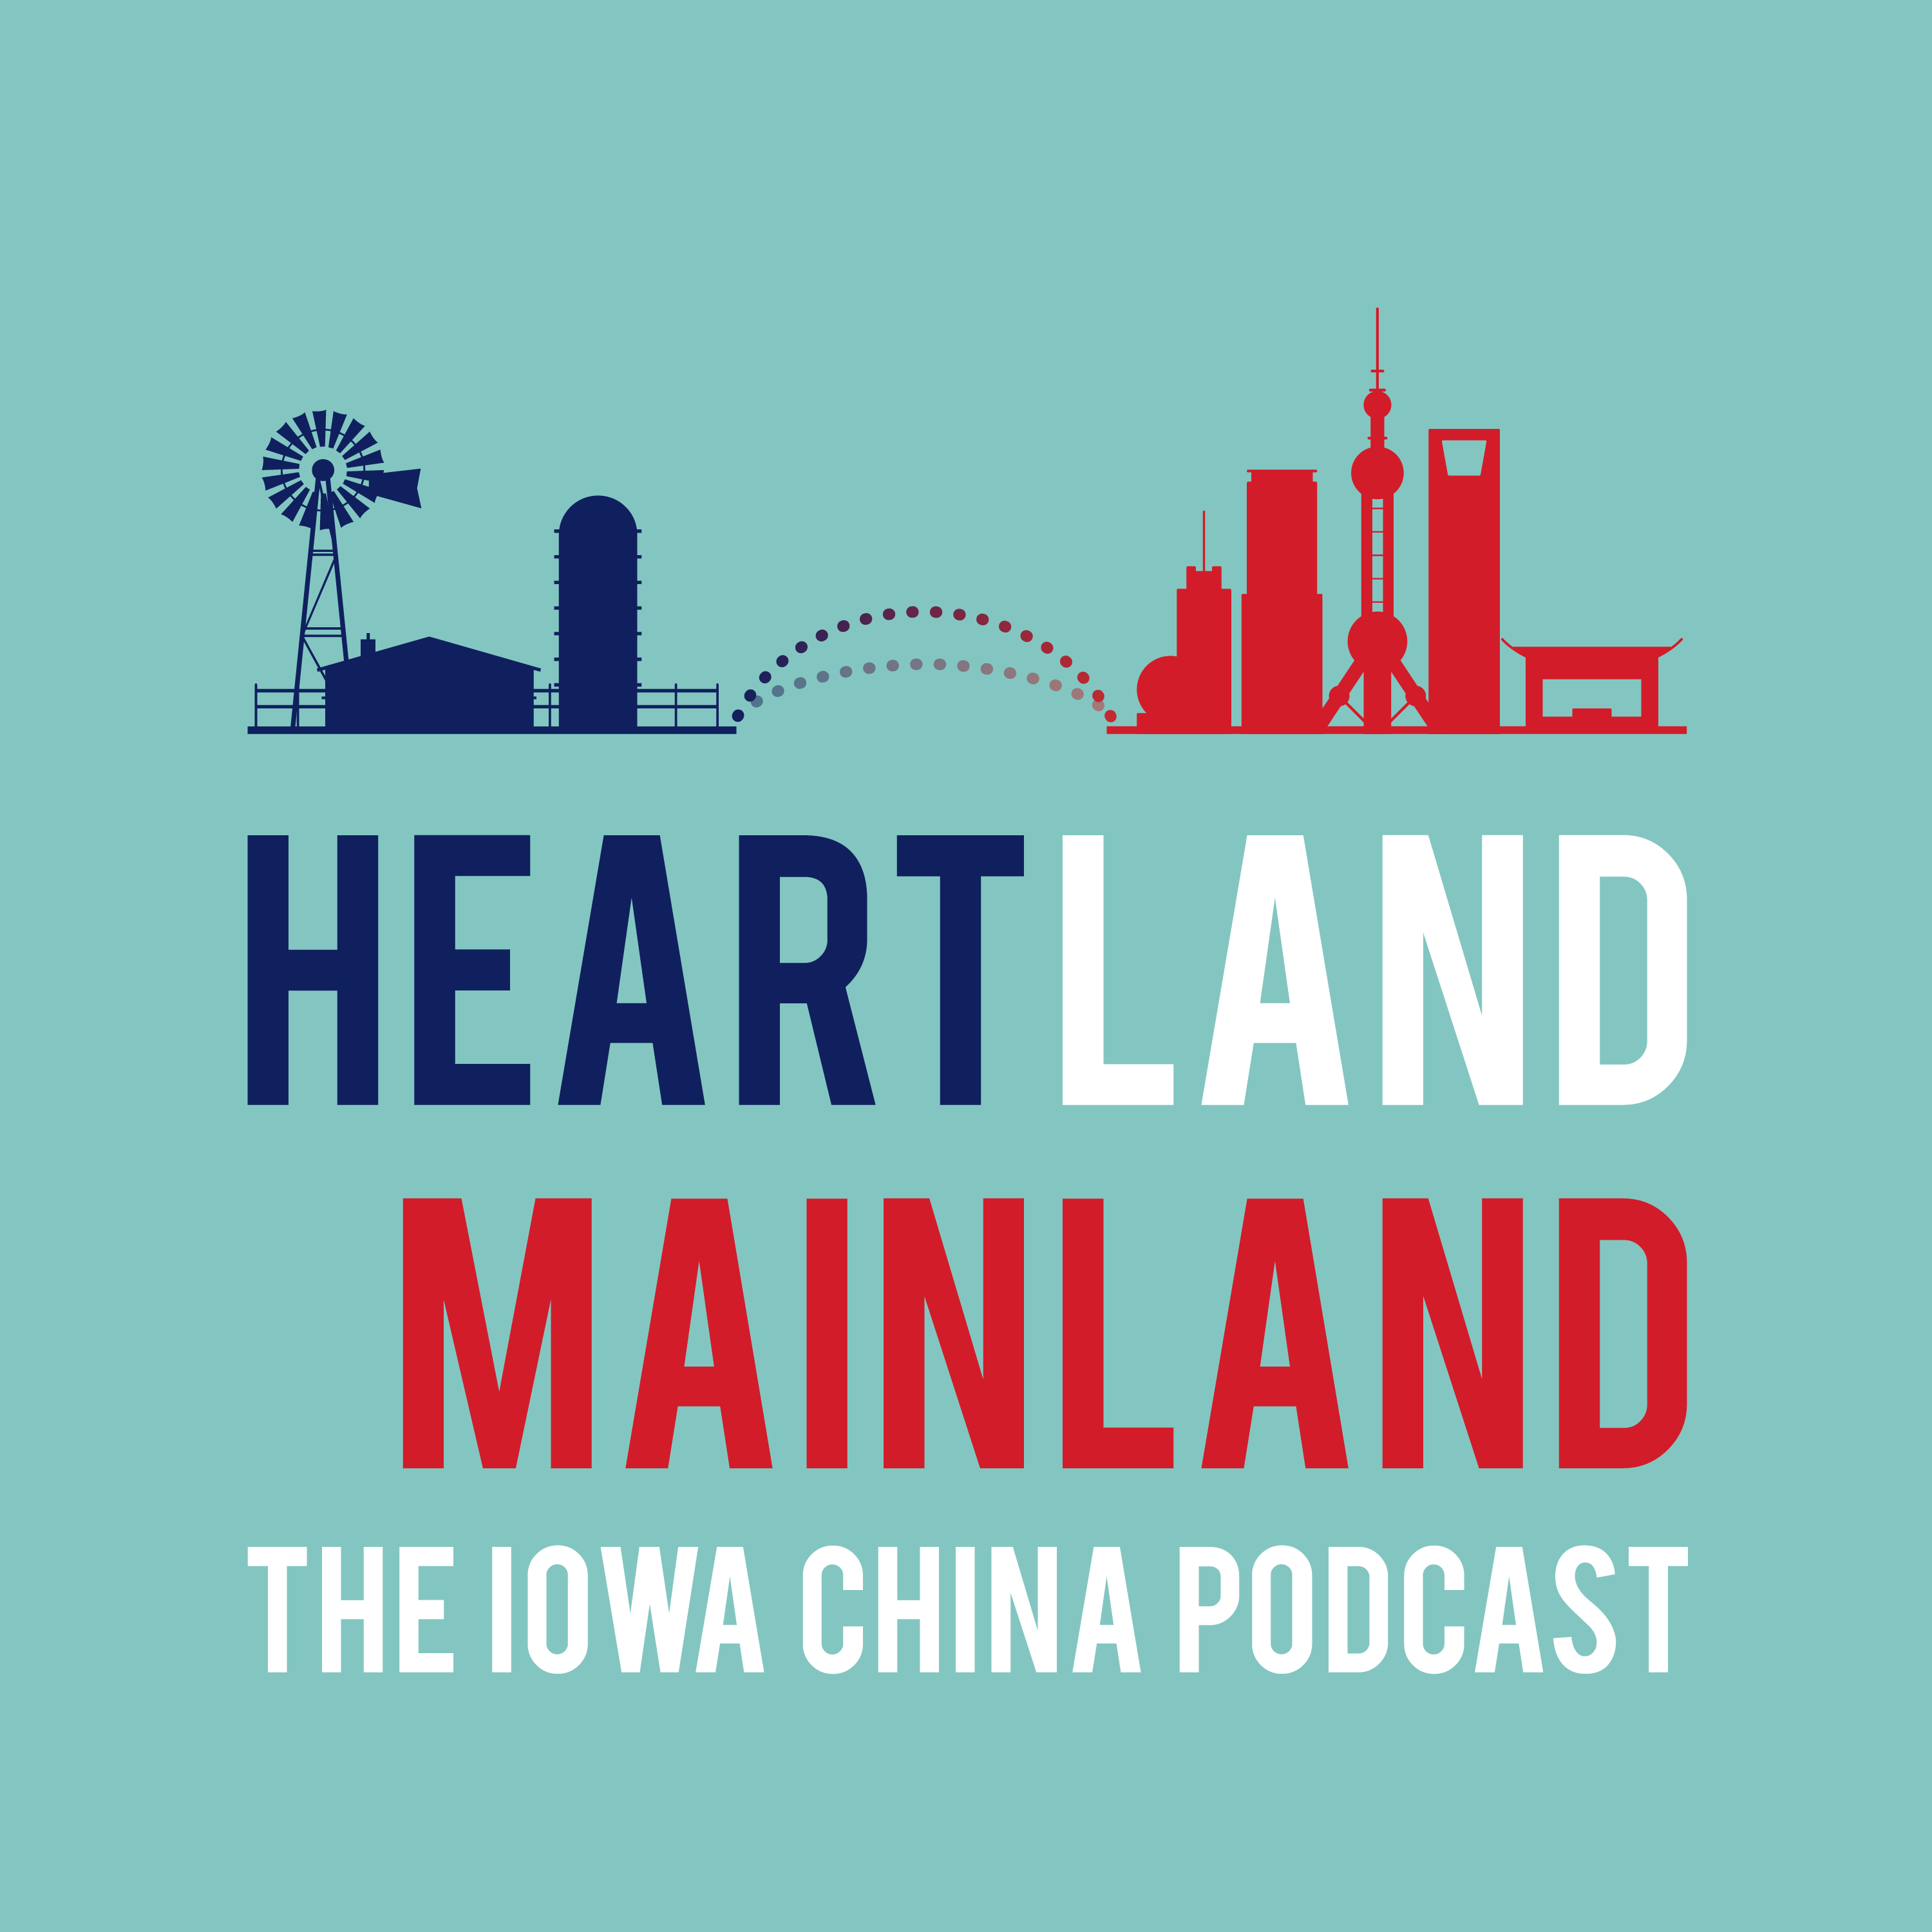 Heartland Mainland logo